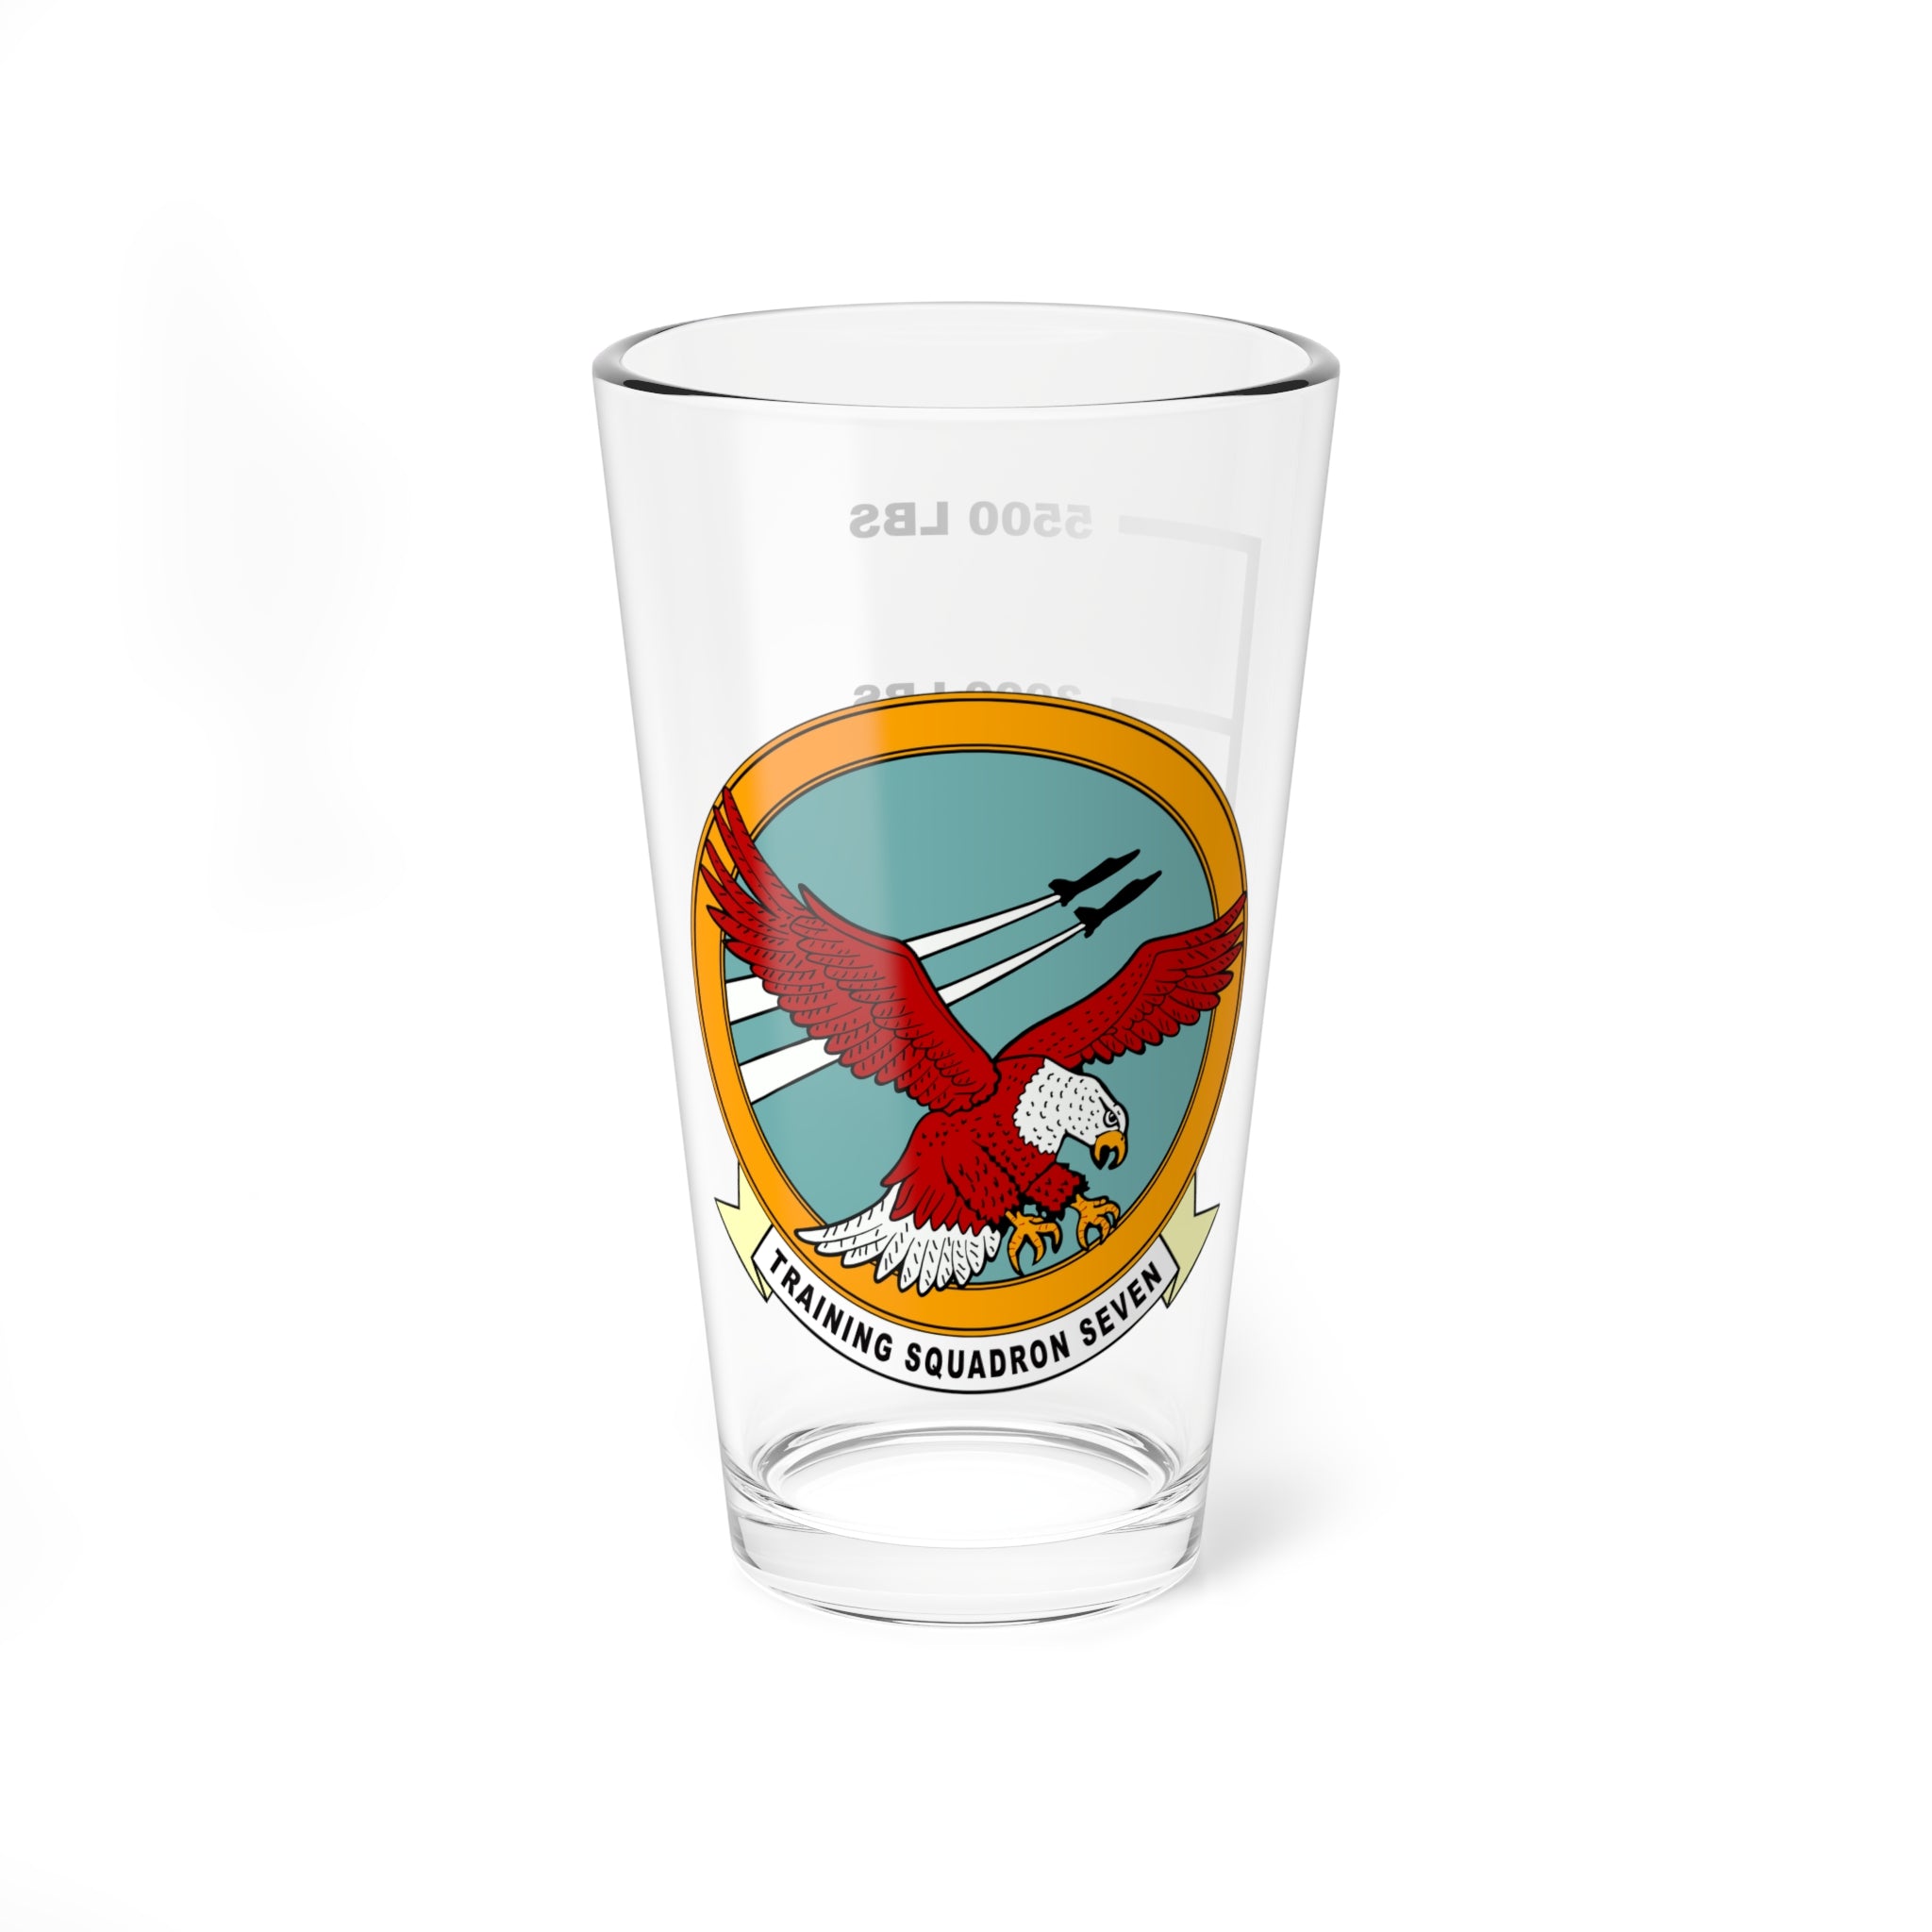 VT-7 "Eagles" Pint Glass, 16oz, Navy, Training Squadron, Naval Aviator, T-45, TA-4J, Meridian